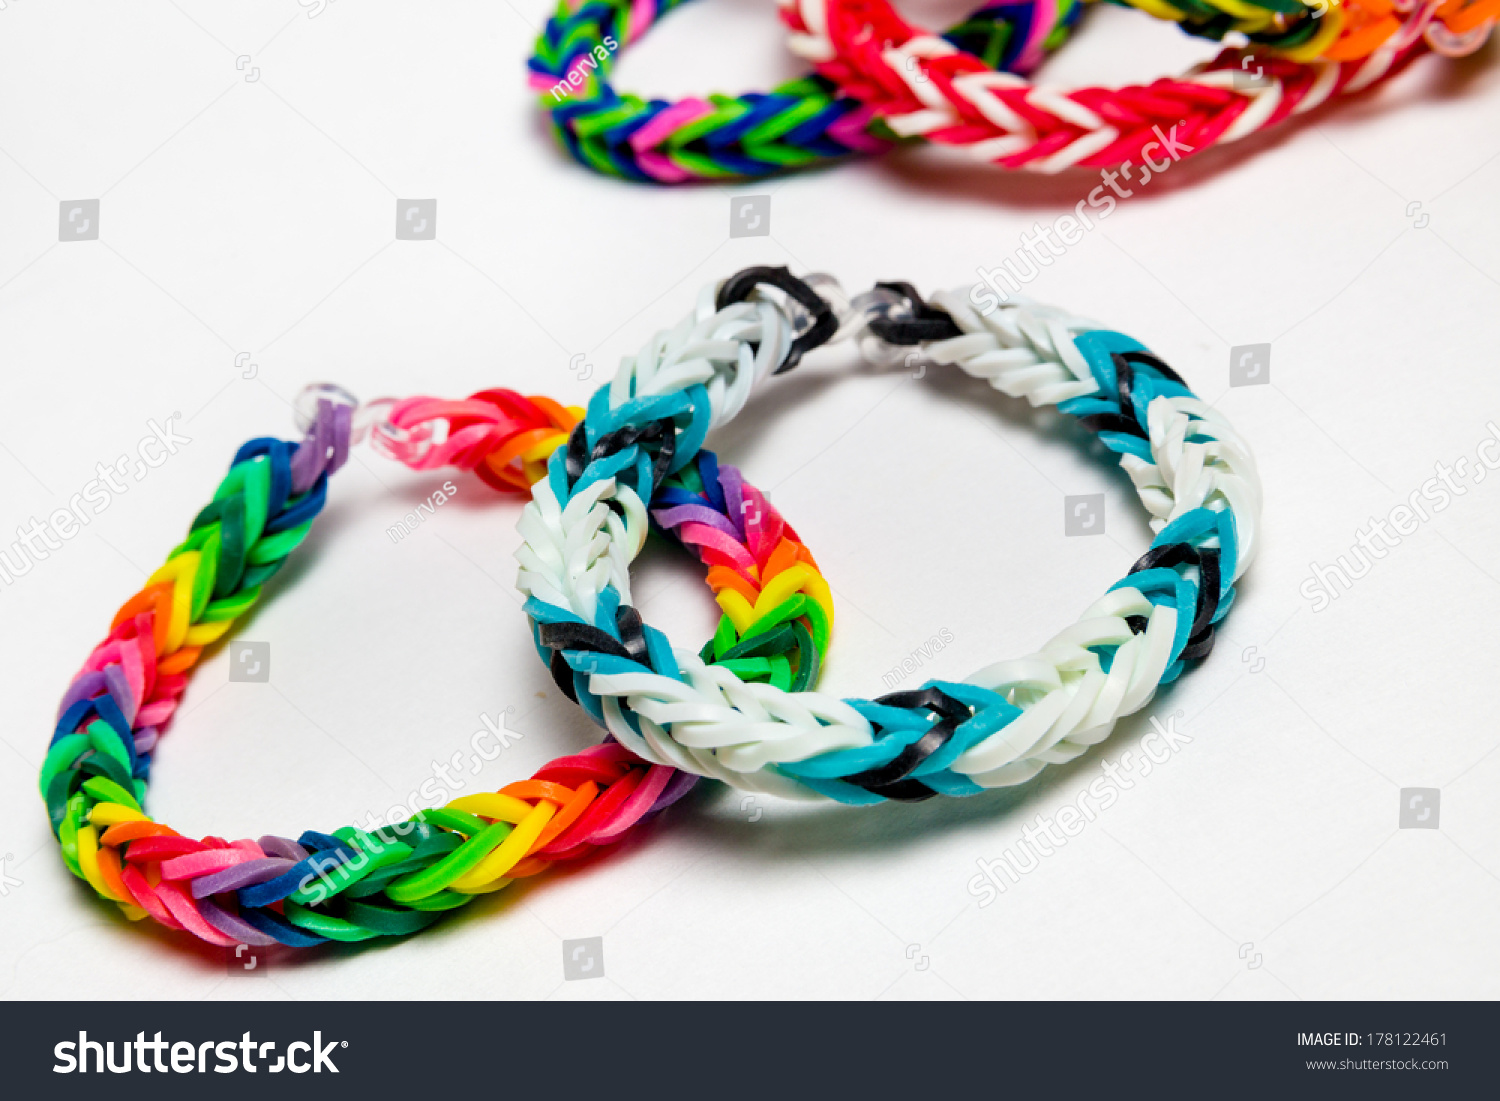 Loom Bracelets On A White Background Stock Photo 178122461 : Shutterstock